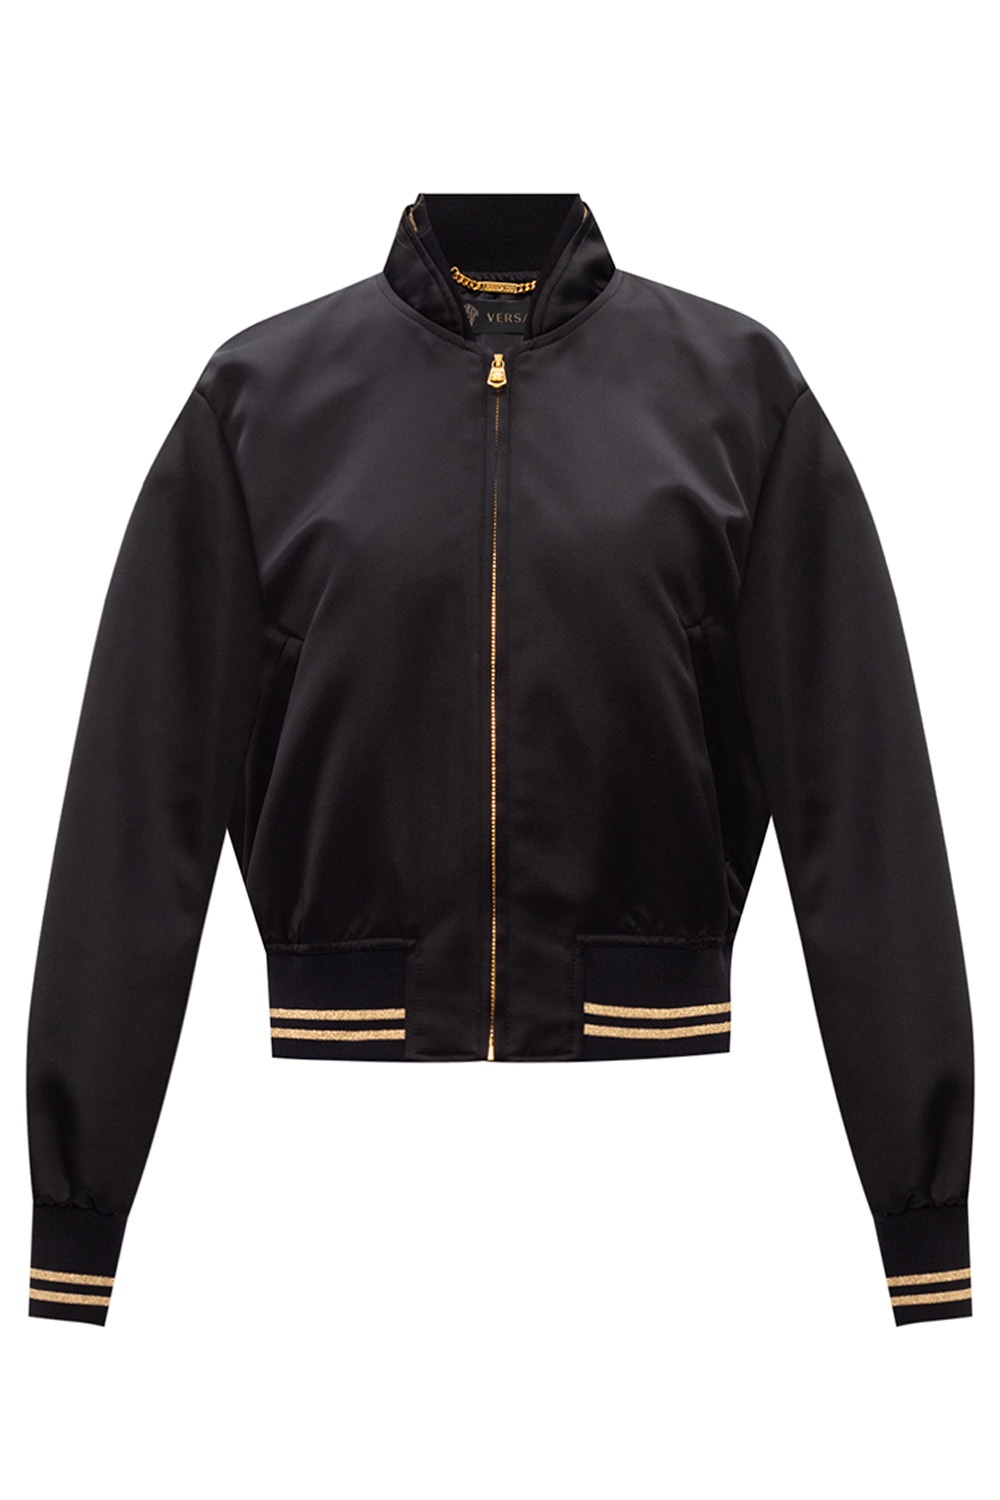 versace bomber jacket black